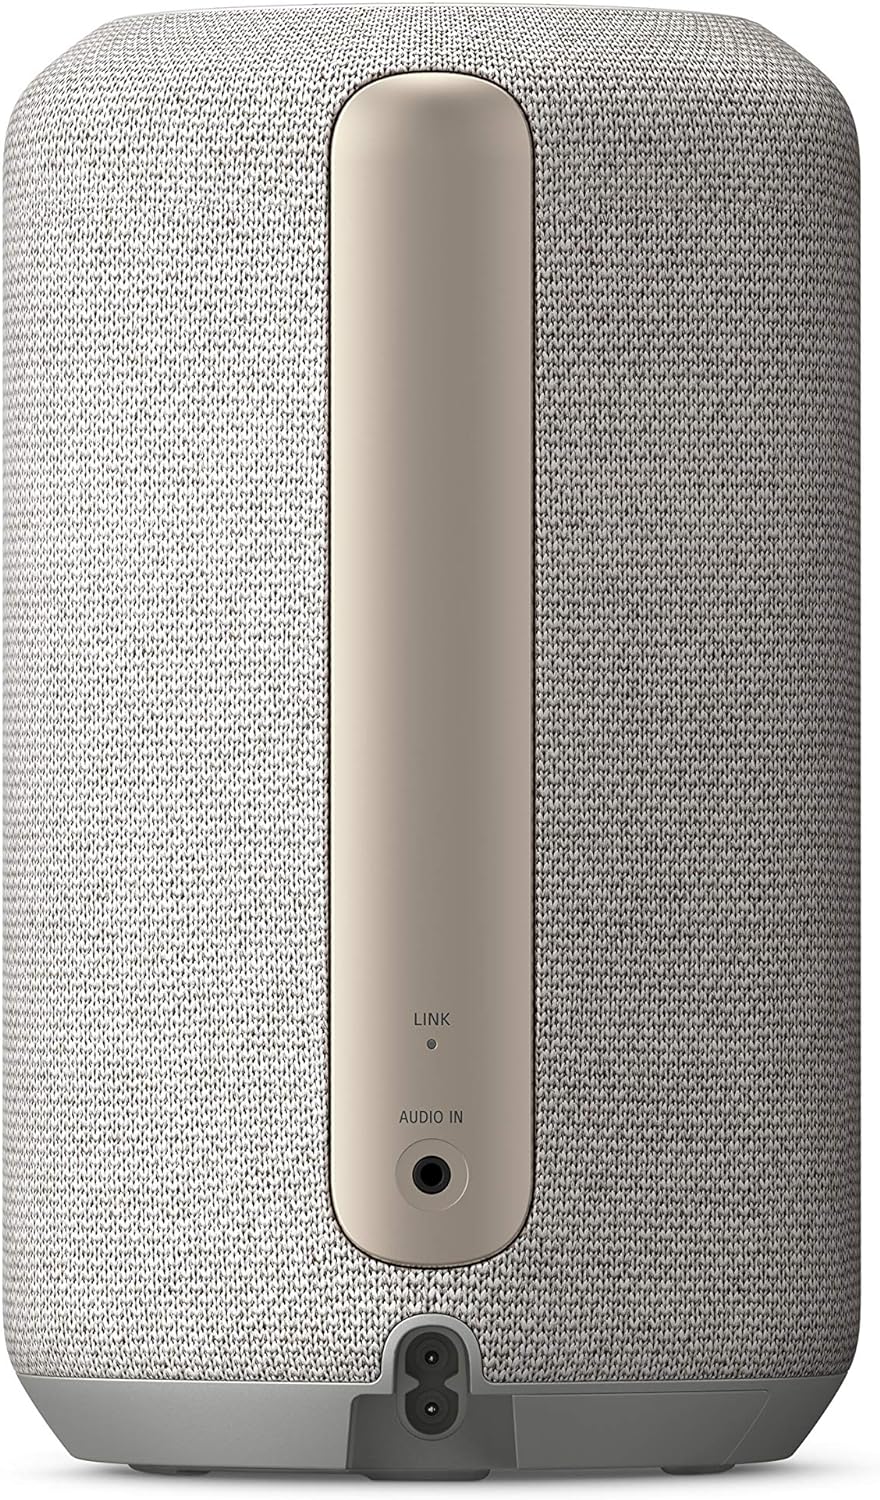 Sony 360 Reality Audio Wi-Fi Enabled Wireless Speaker - Light Gray (Refurbished)